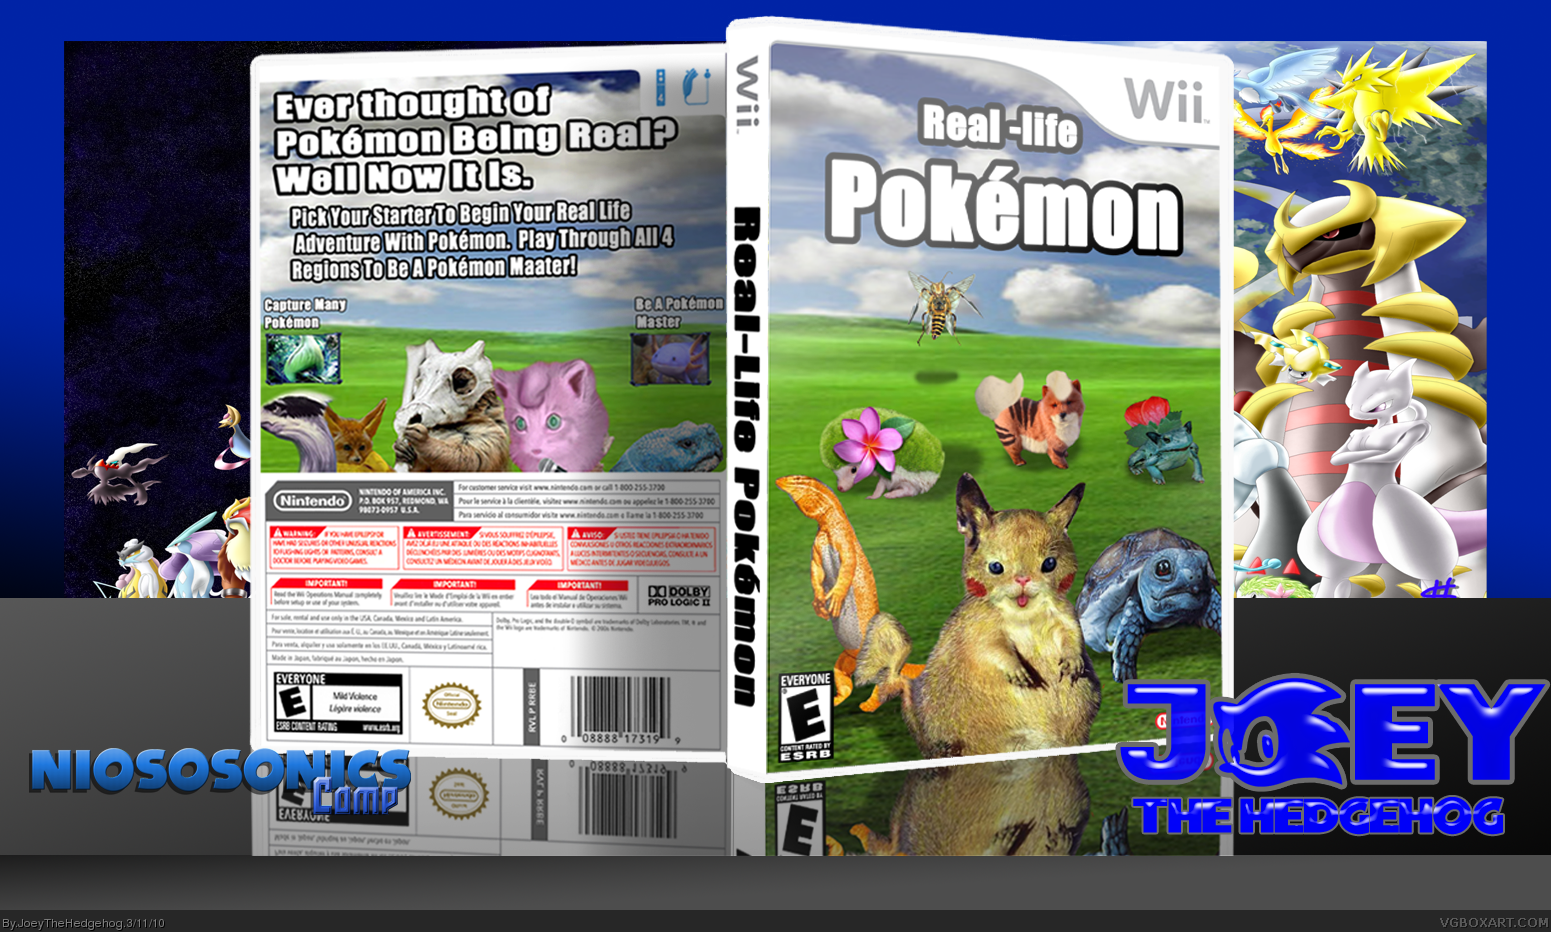 Real-Life Pokemon box cover